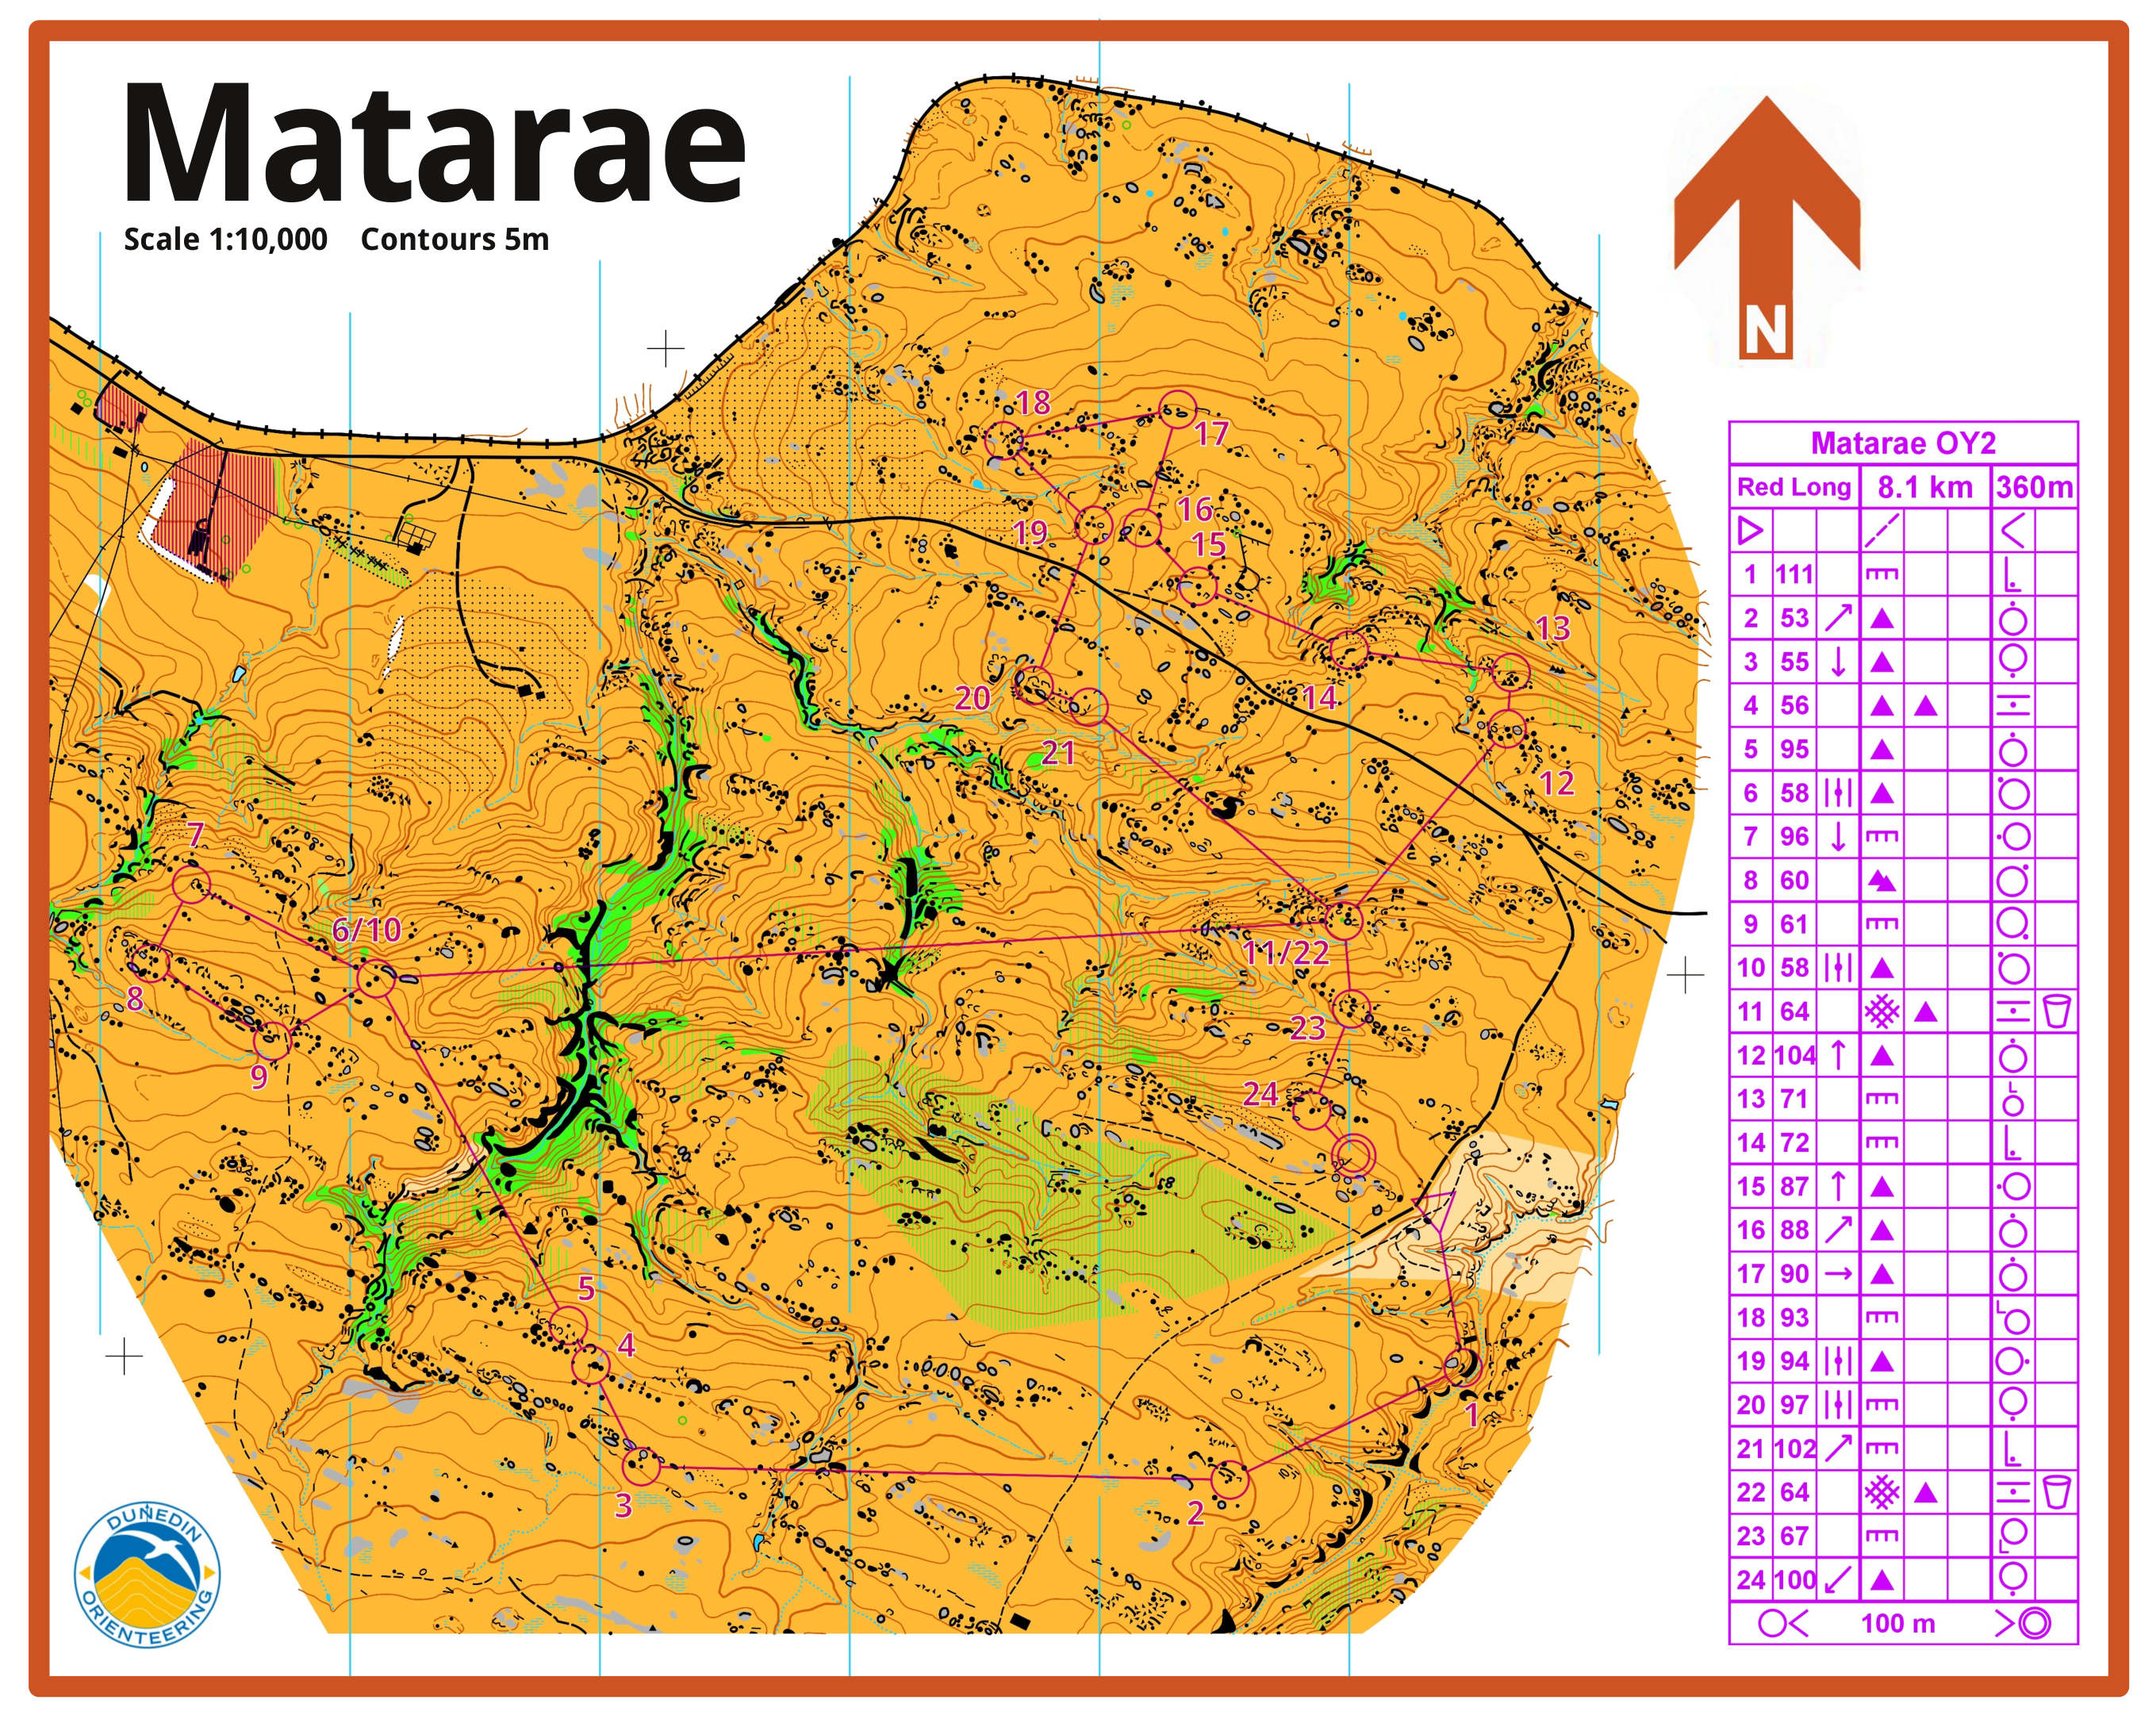 Matarae OY2 (2015-05-17)